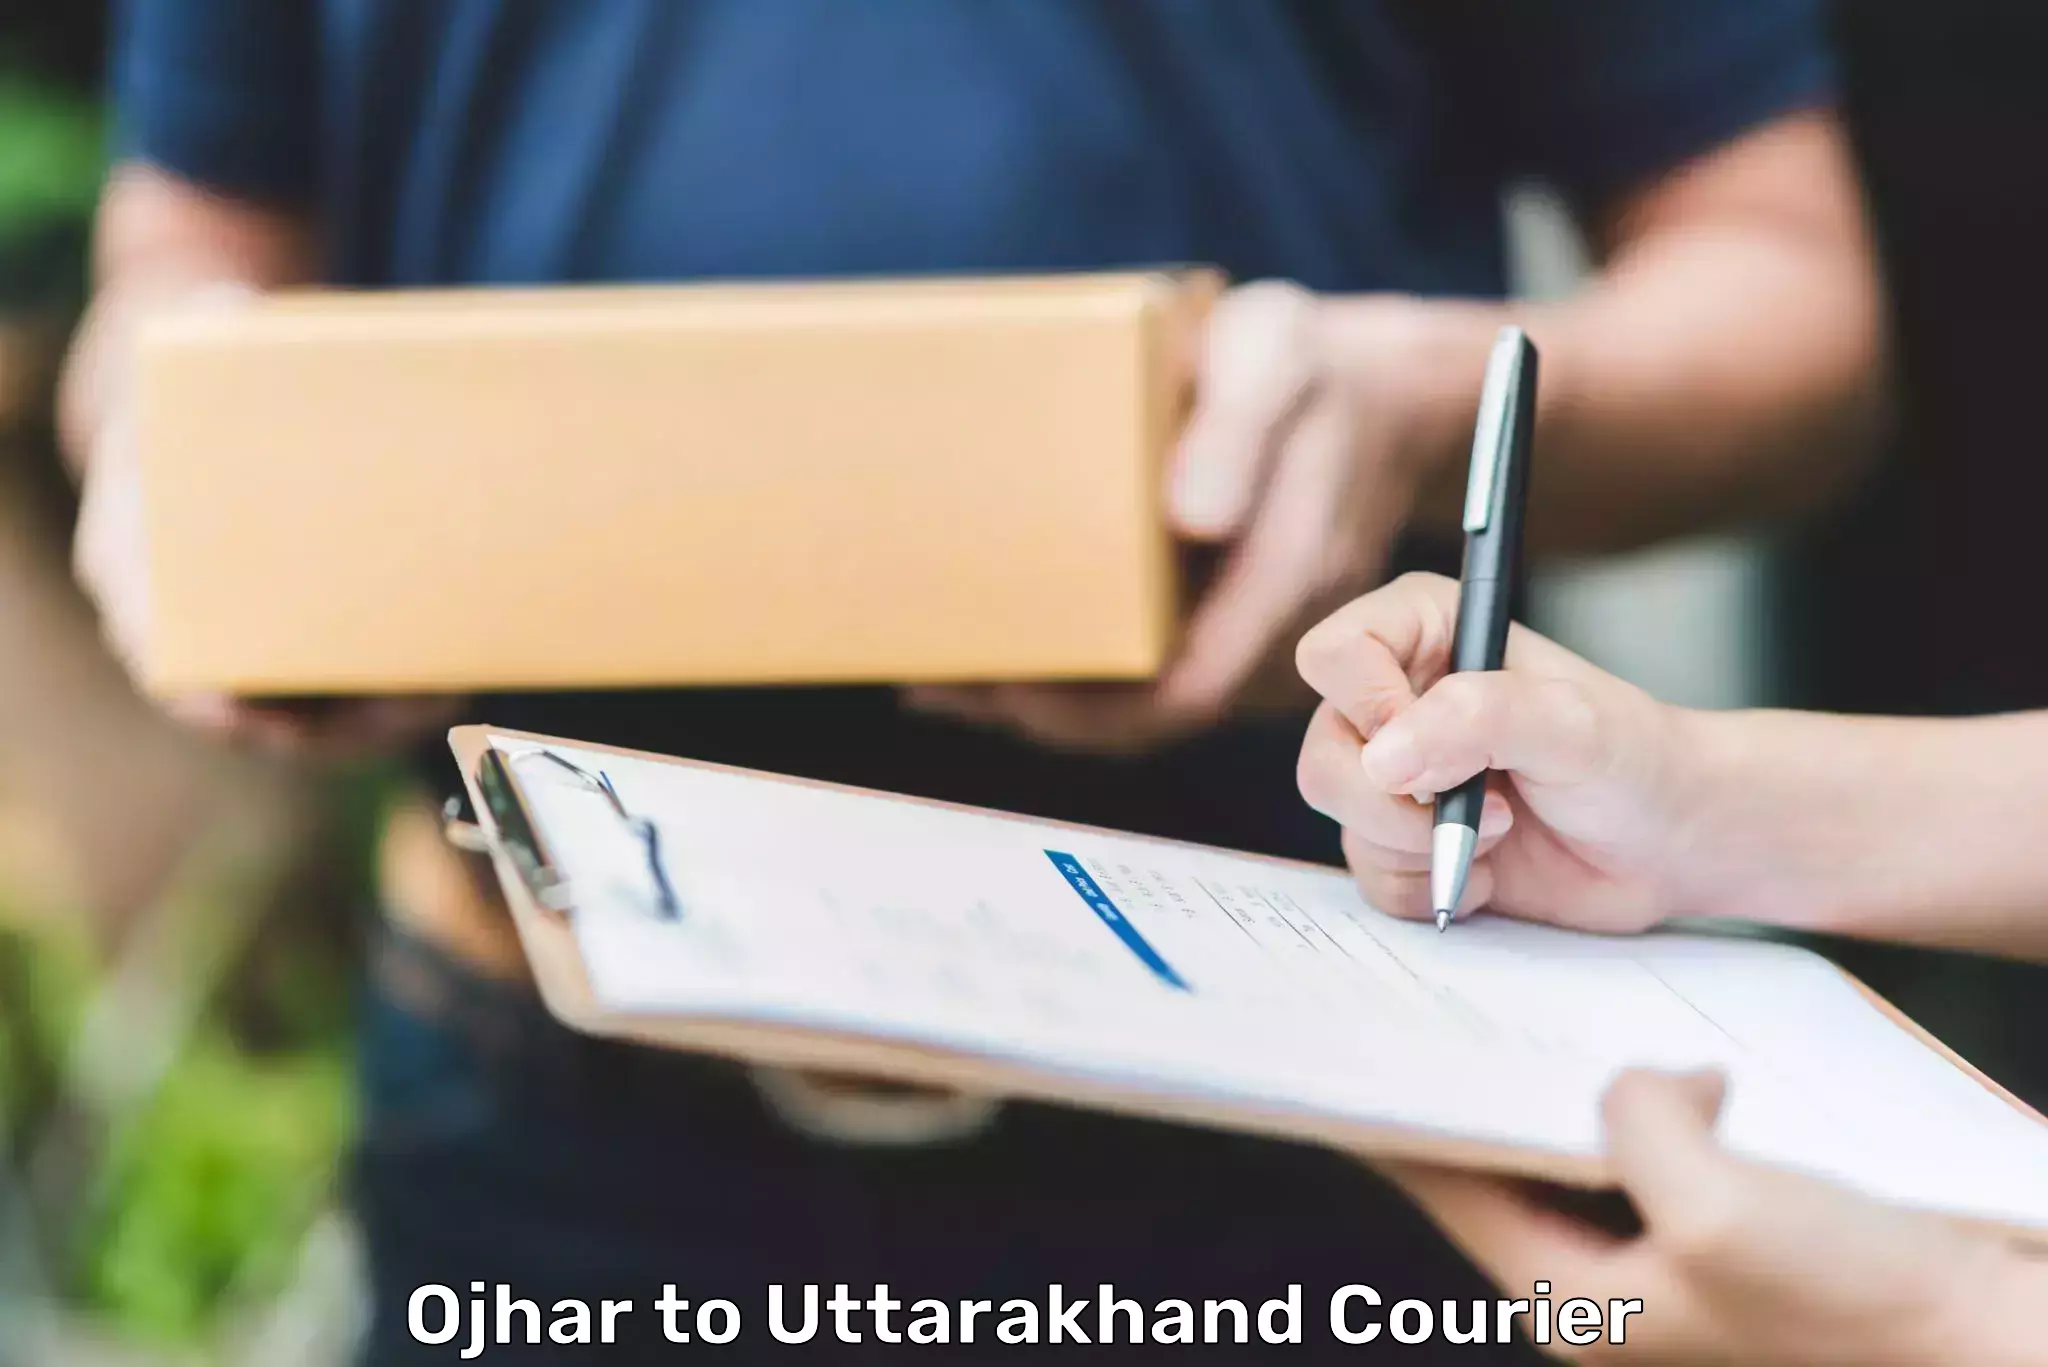 Remote area delivery Ojhar to Uttarakhand